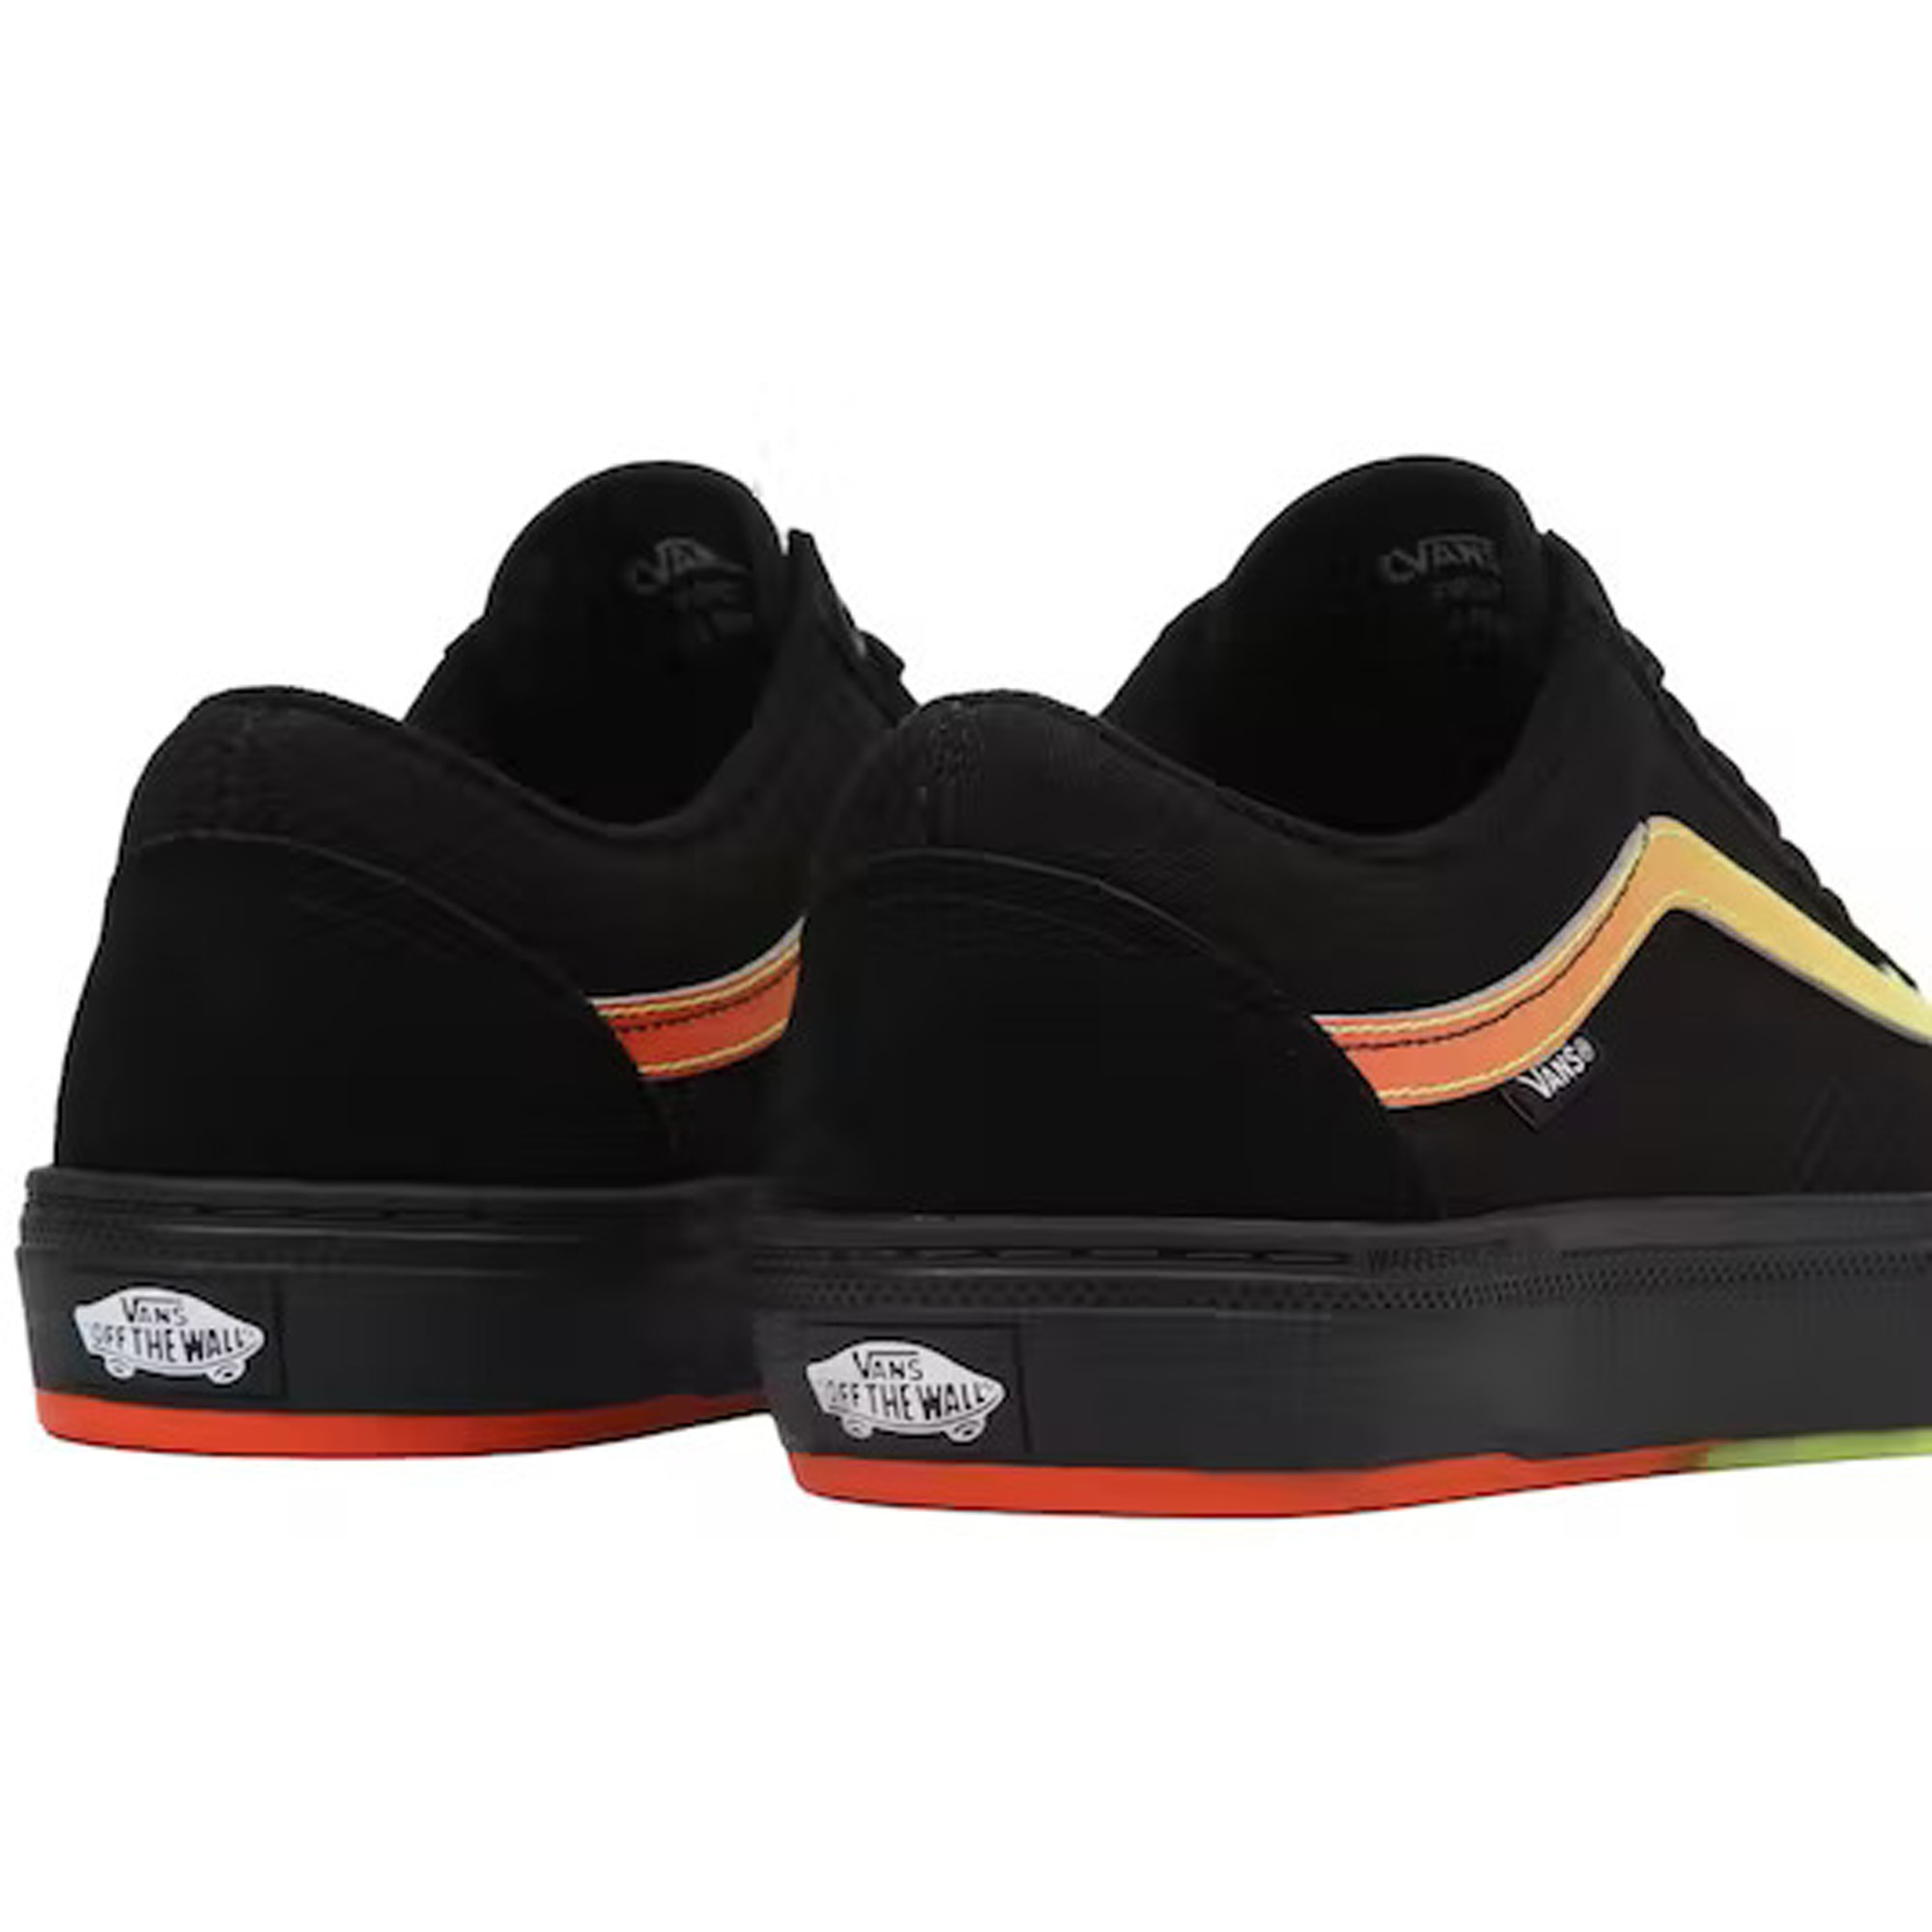 Vans BMX Old Skool Skate Shoes/Trainers